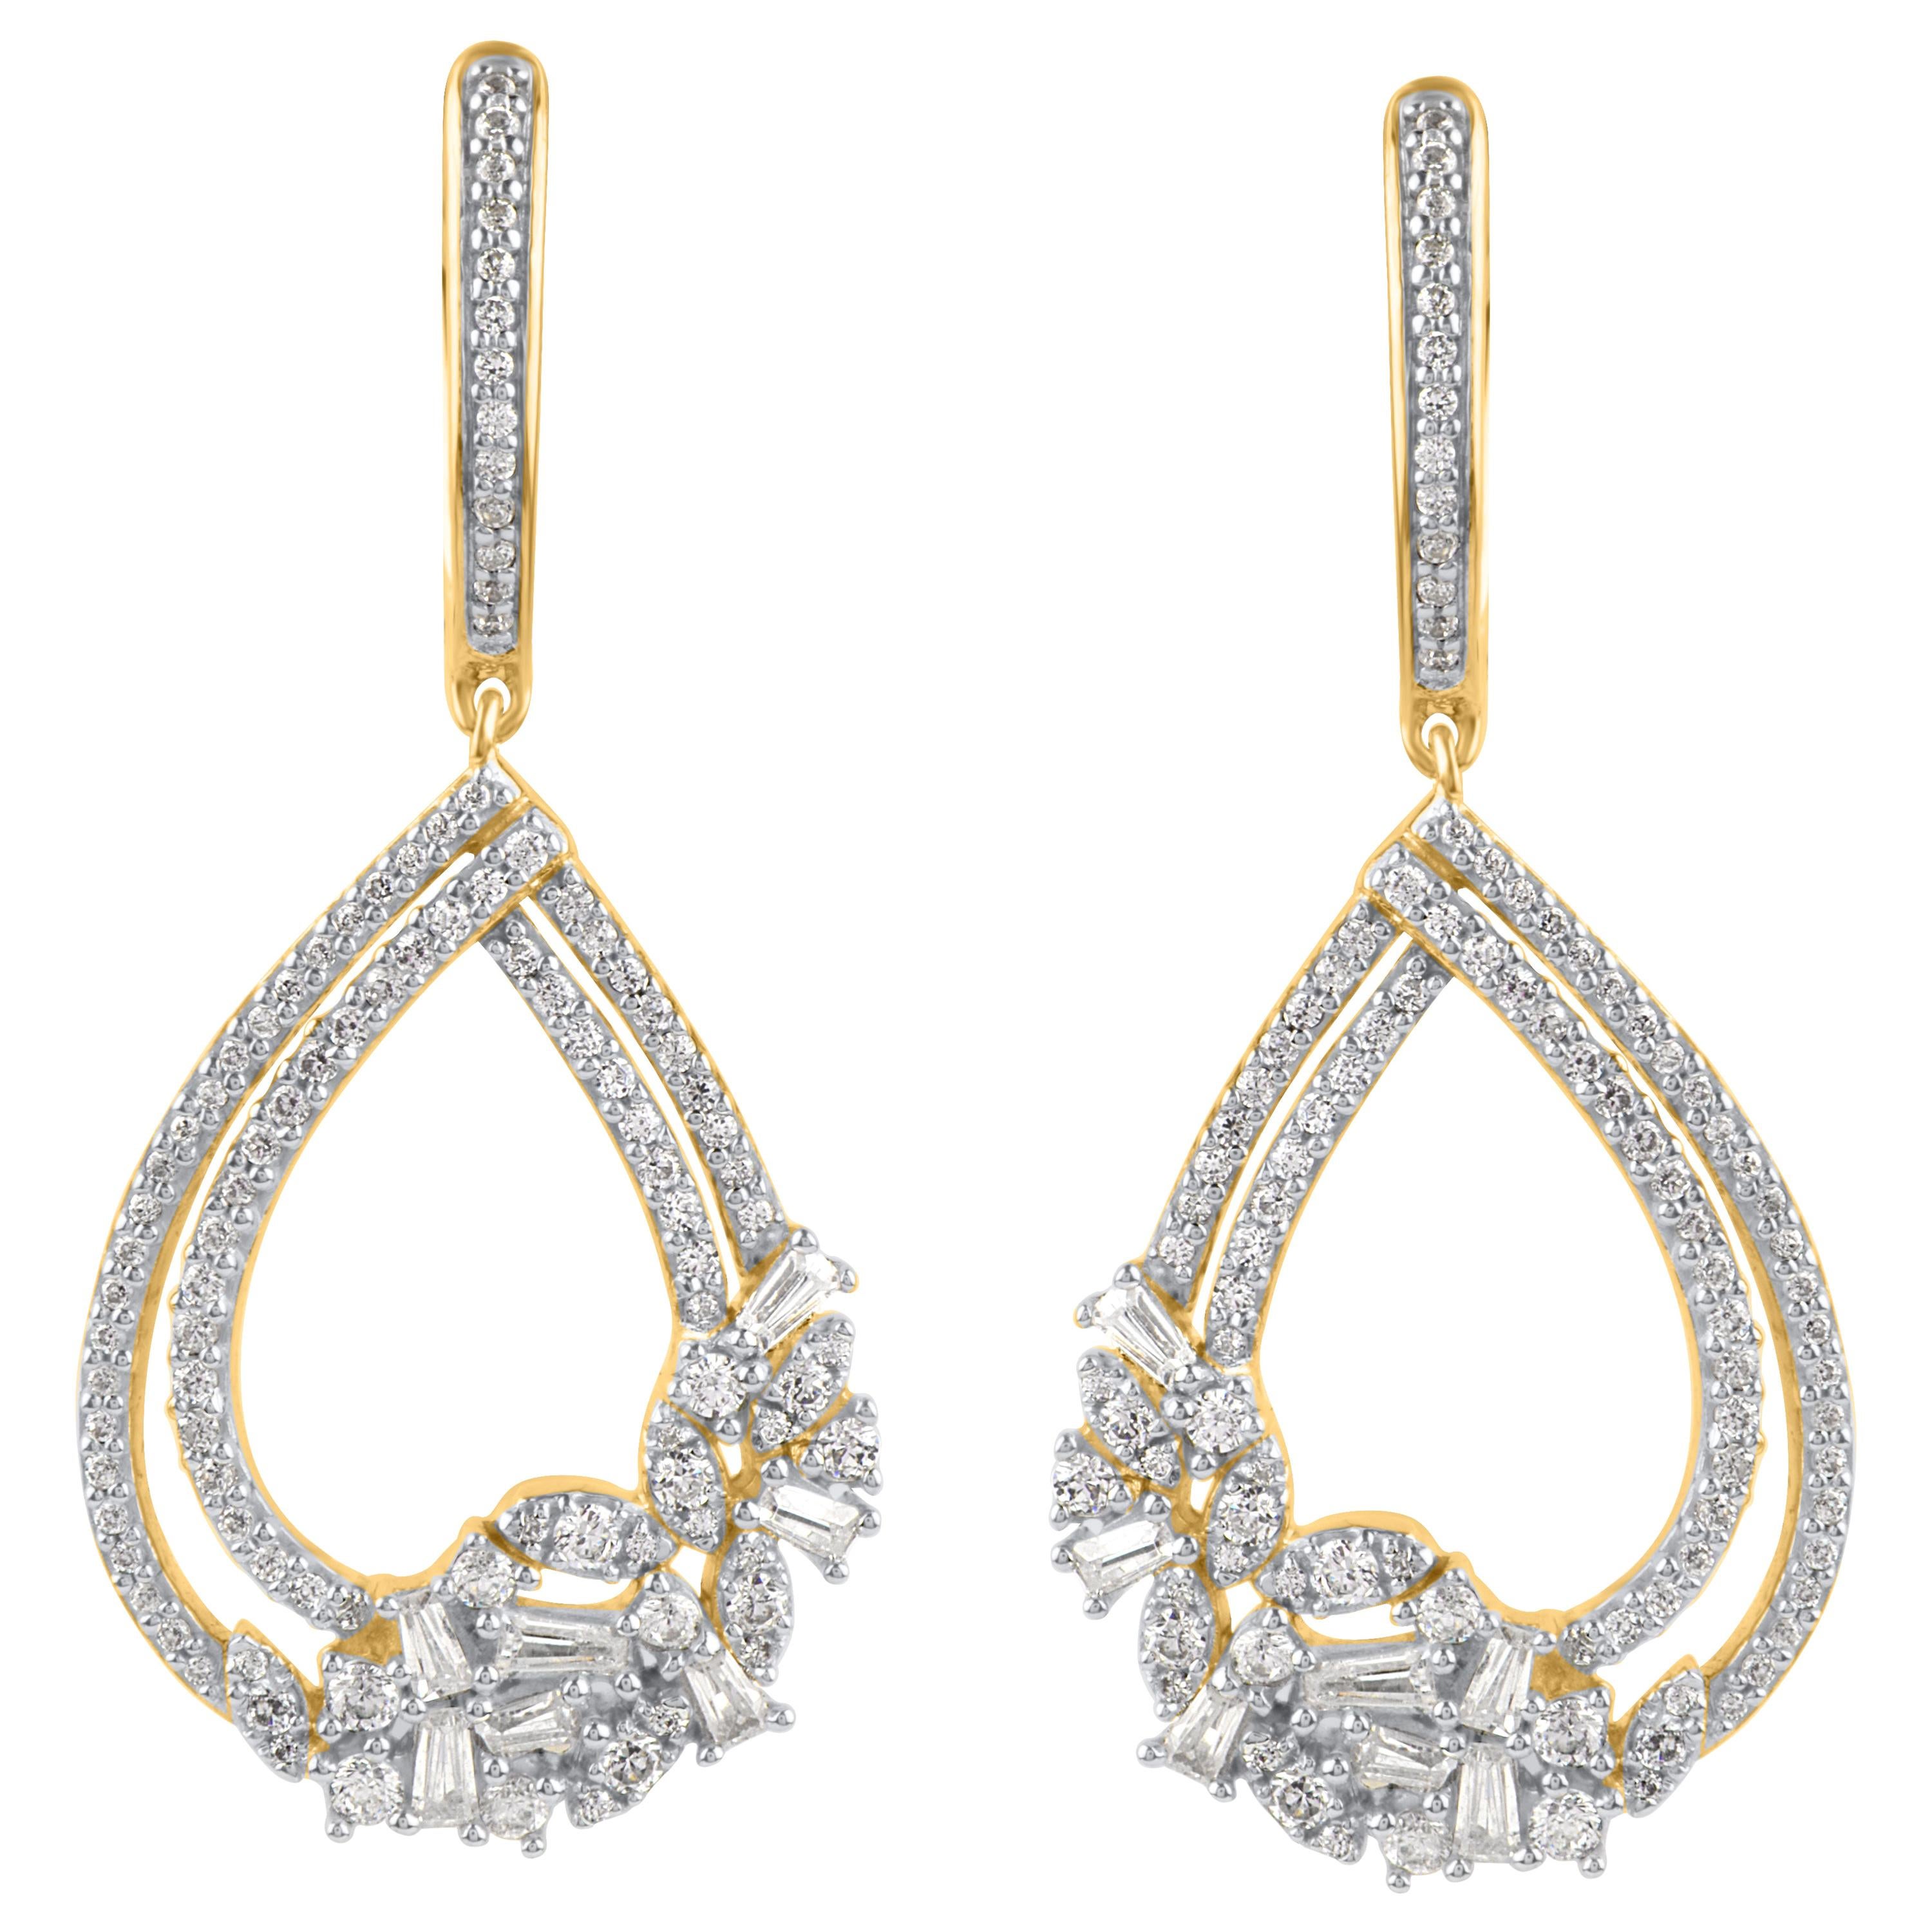 TJD 1.00 Carat Round & Baguette Diamond 14K Rose Gold Pear Shaped Drop Earrings